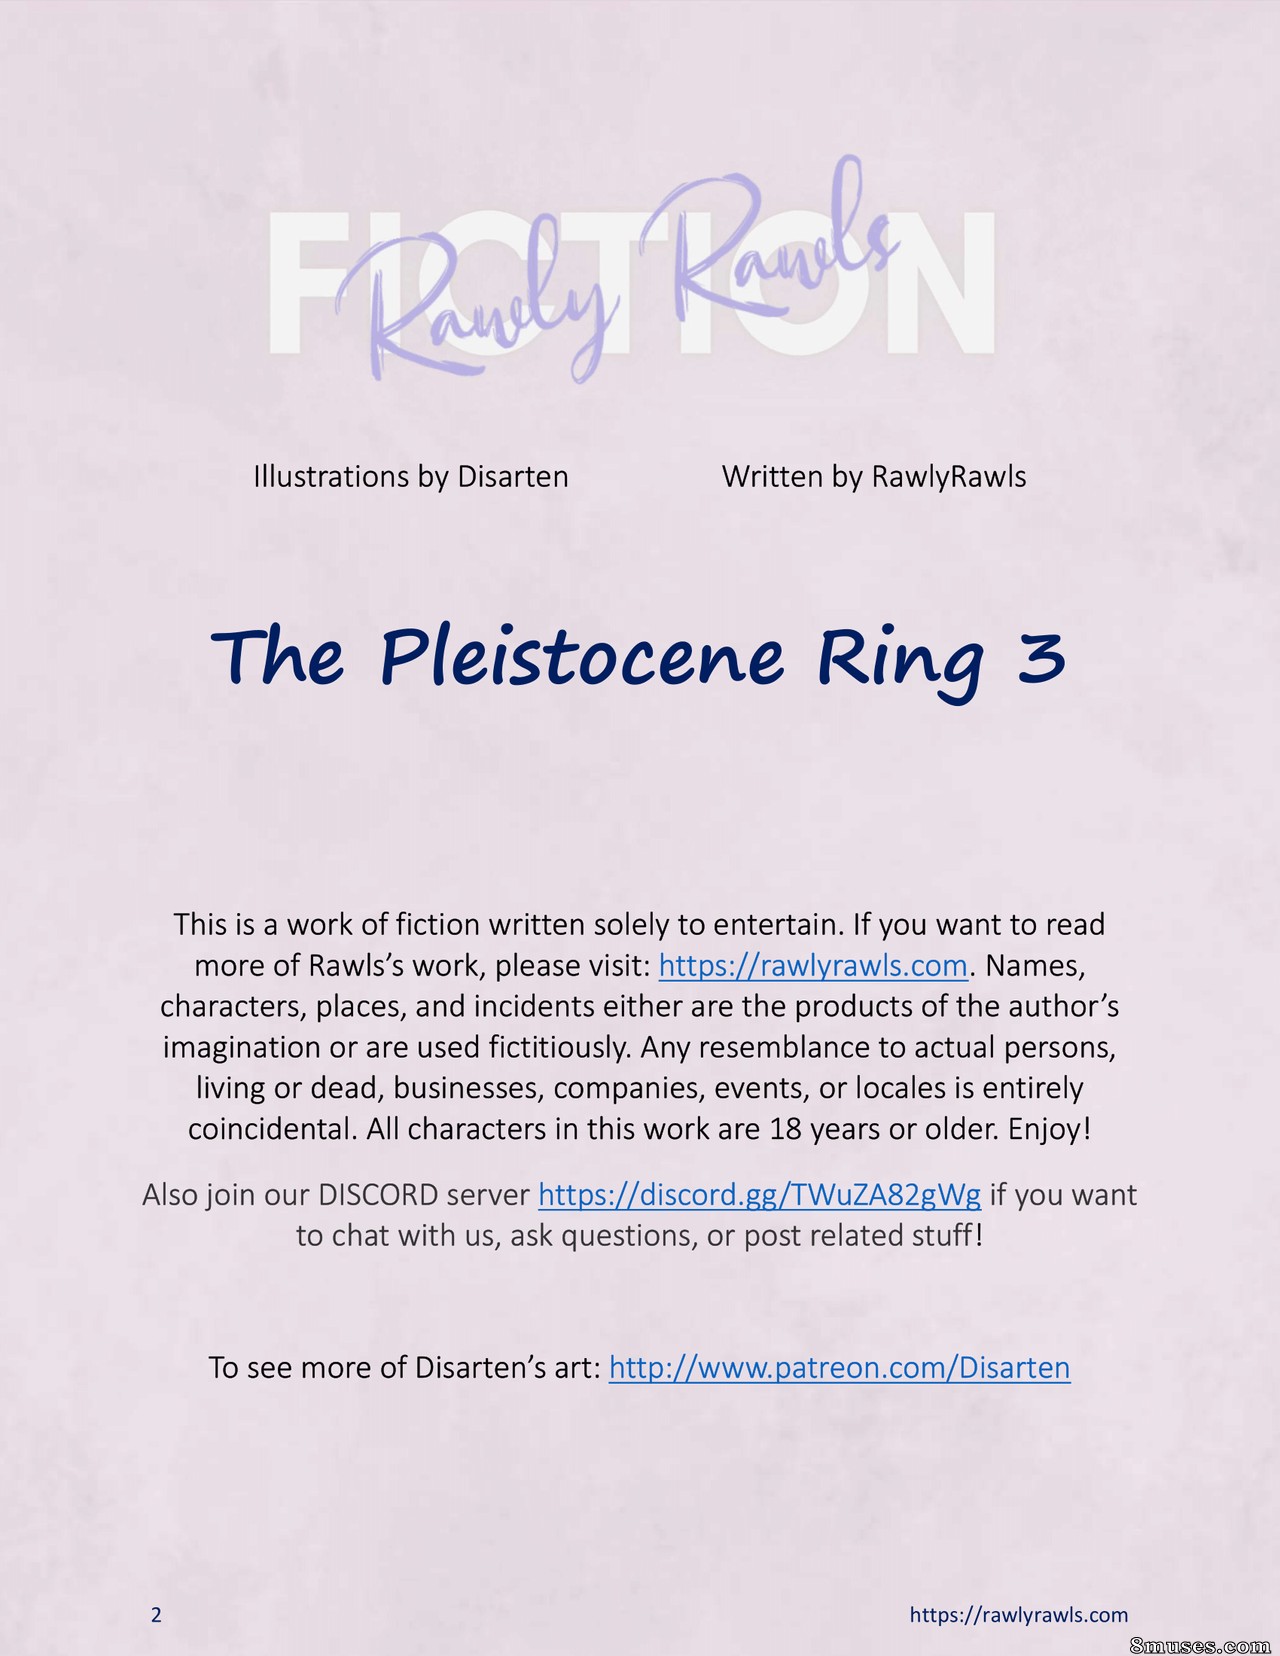 The pleistocene ring